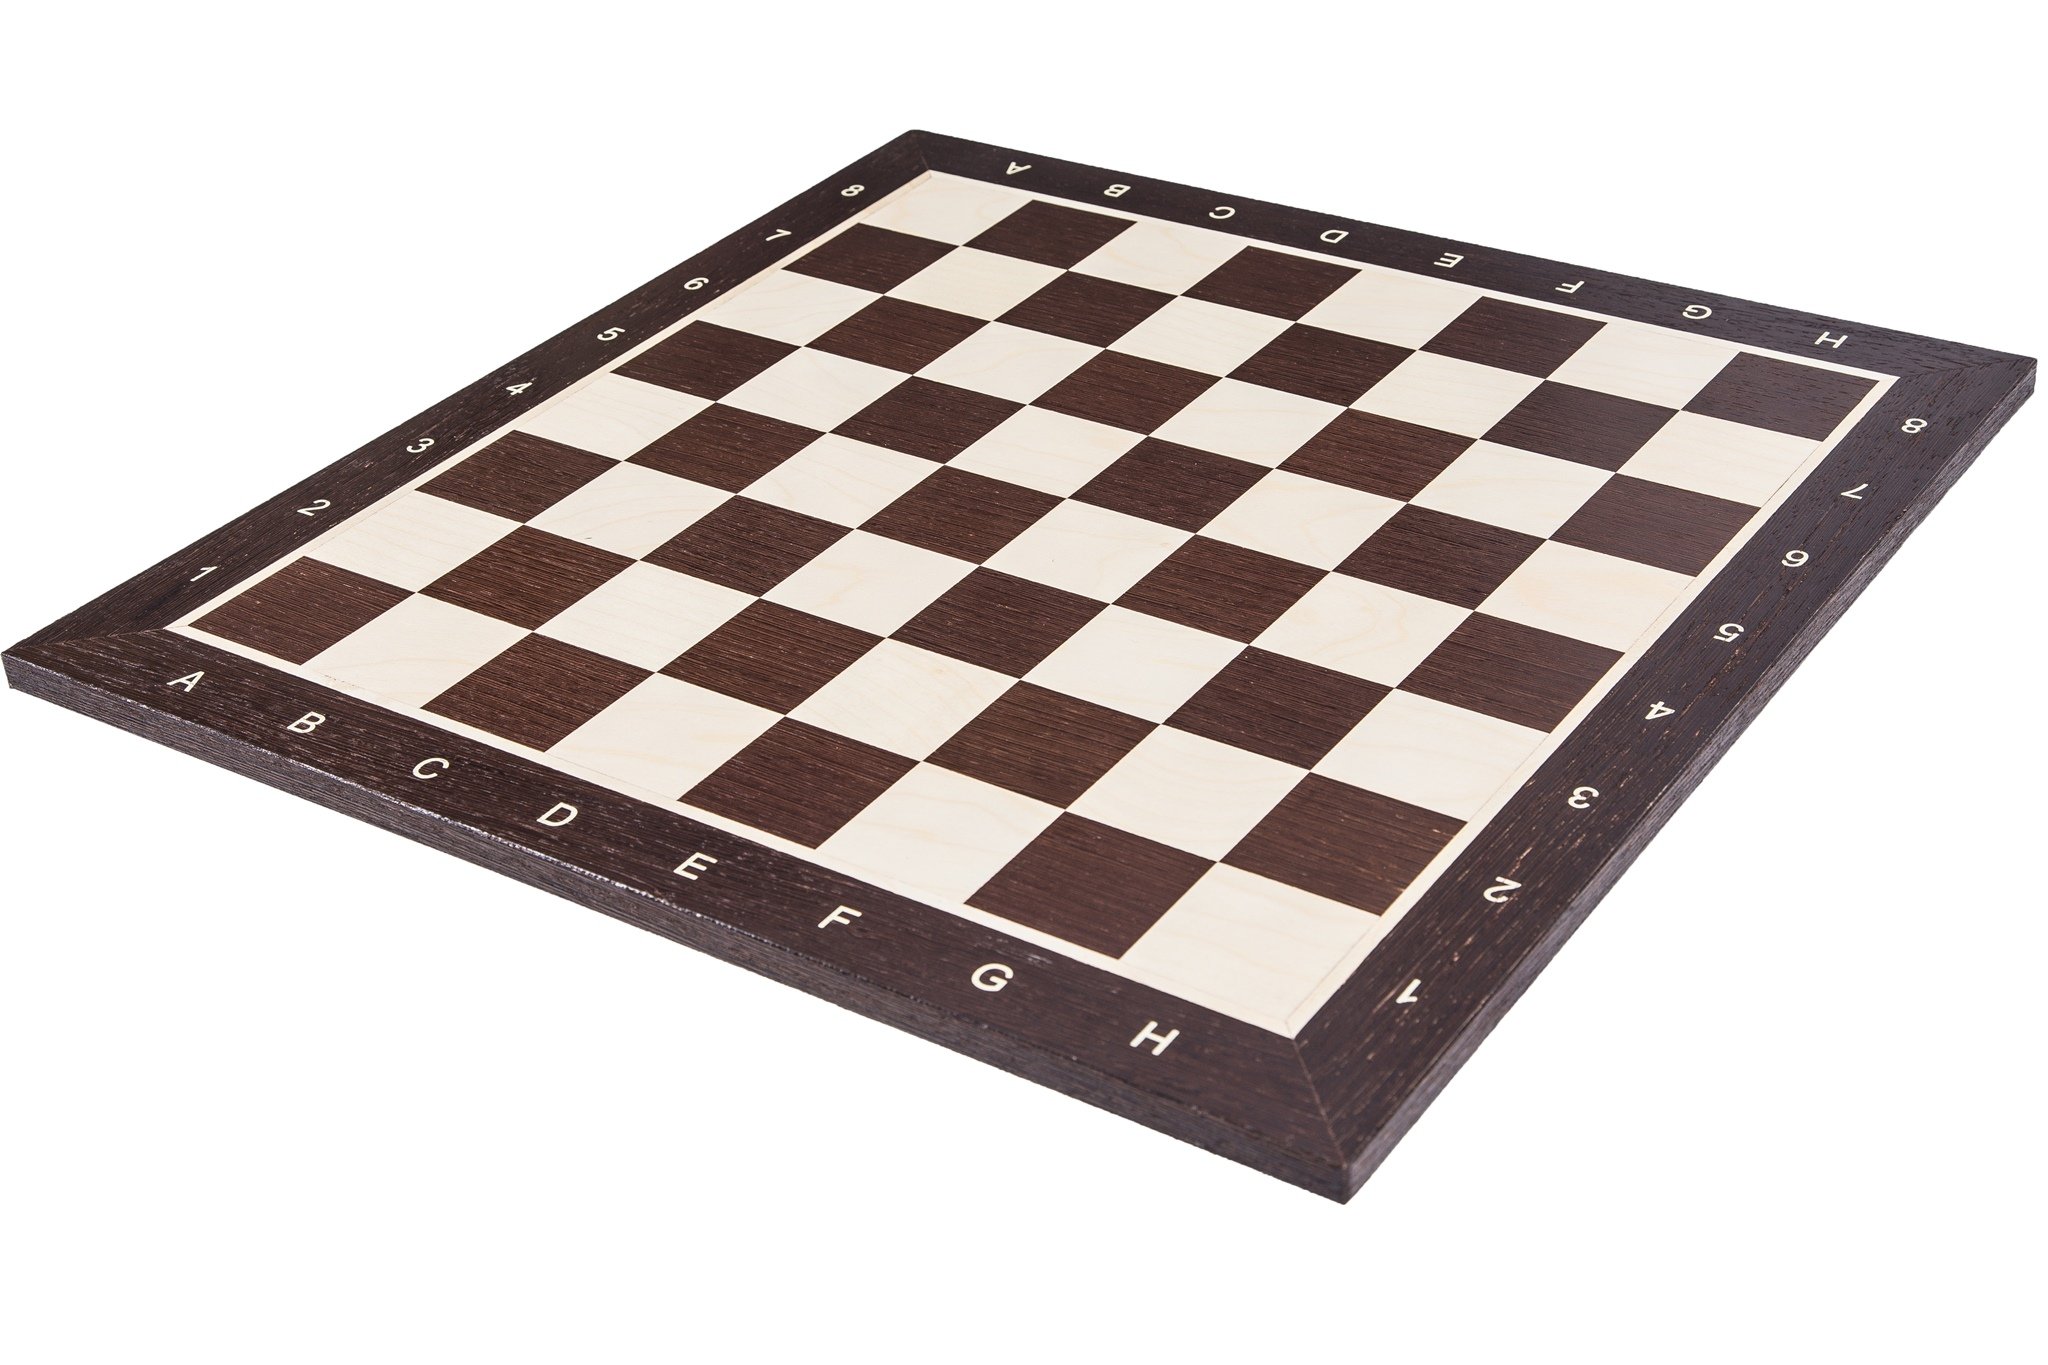 Chessboard. Поле для шашек ин-1829. Шахматная доска цельная классика 50 см. Доска шахматная нескладная 50 см. Доска шахматная турнирная венге.